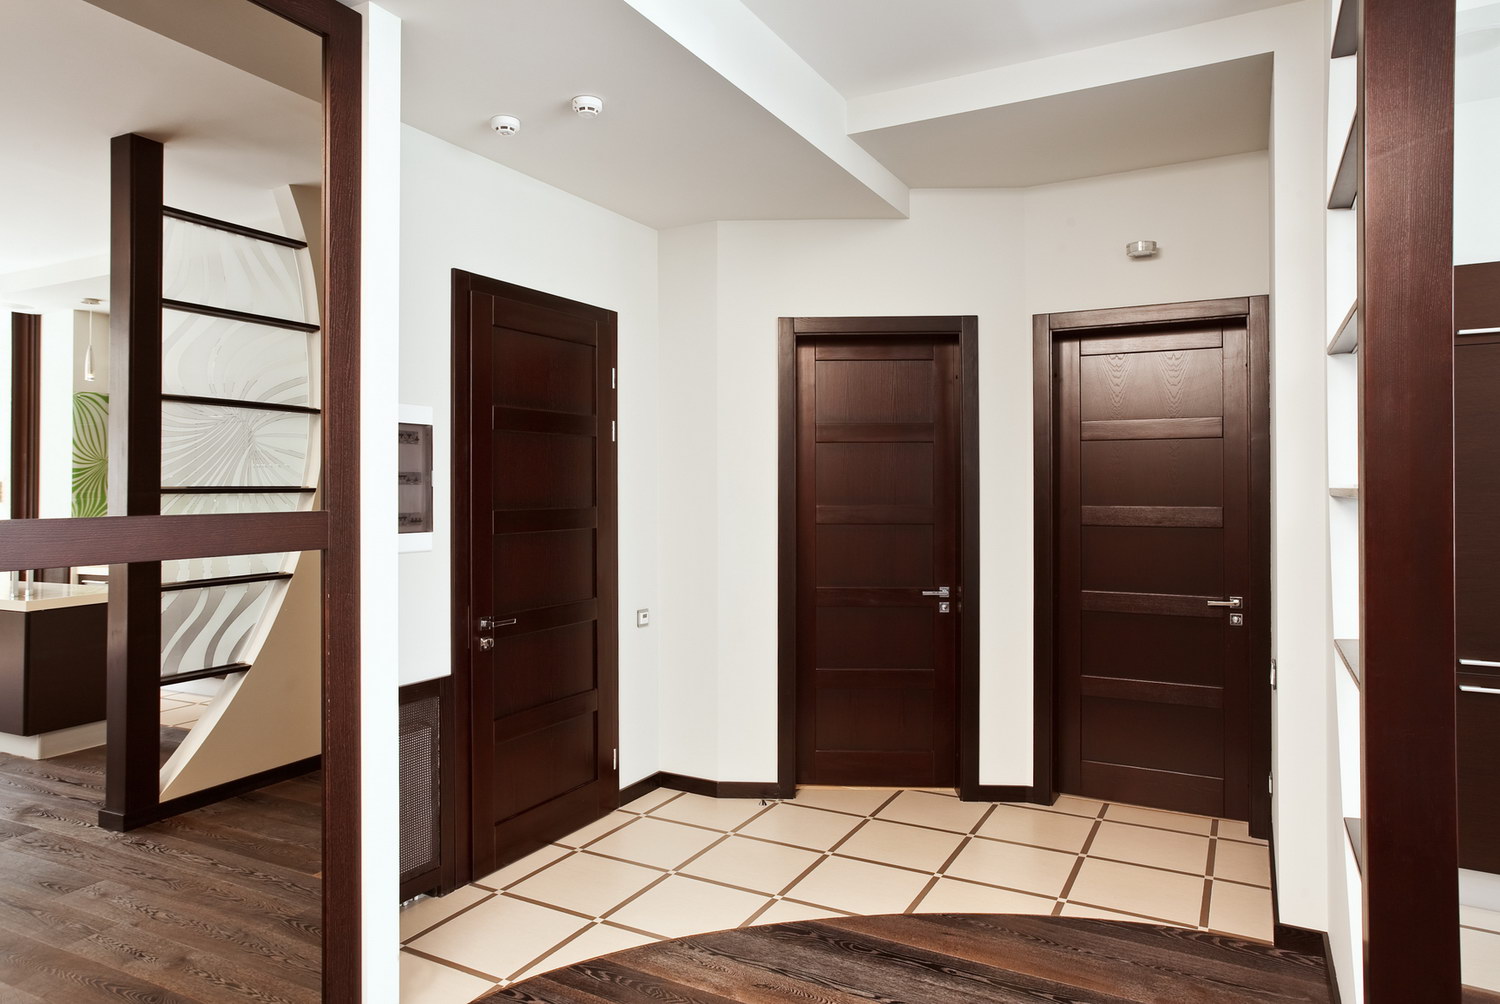 Темные двери в квартире. Интерьер квартиры с коричневыми дверями. Дверь коричневая. Разные двери в интерьере квартиры. Межкомнатные двери в коридоре.